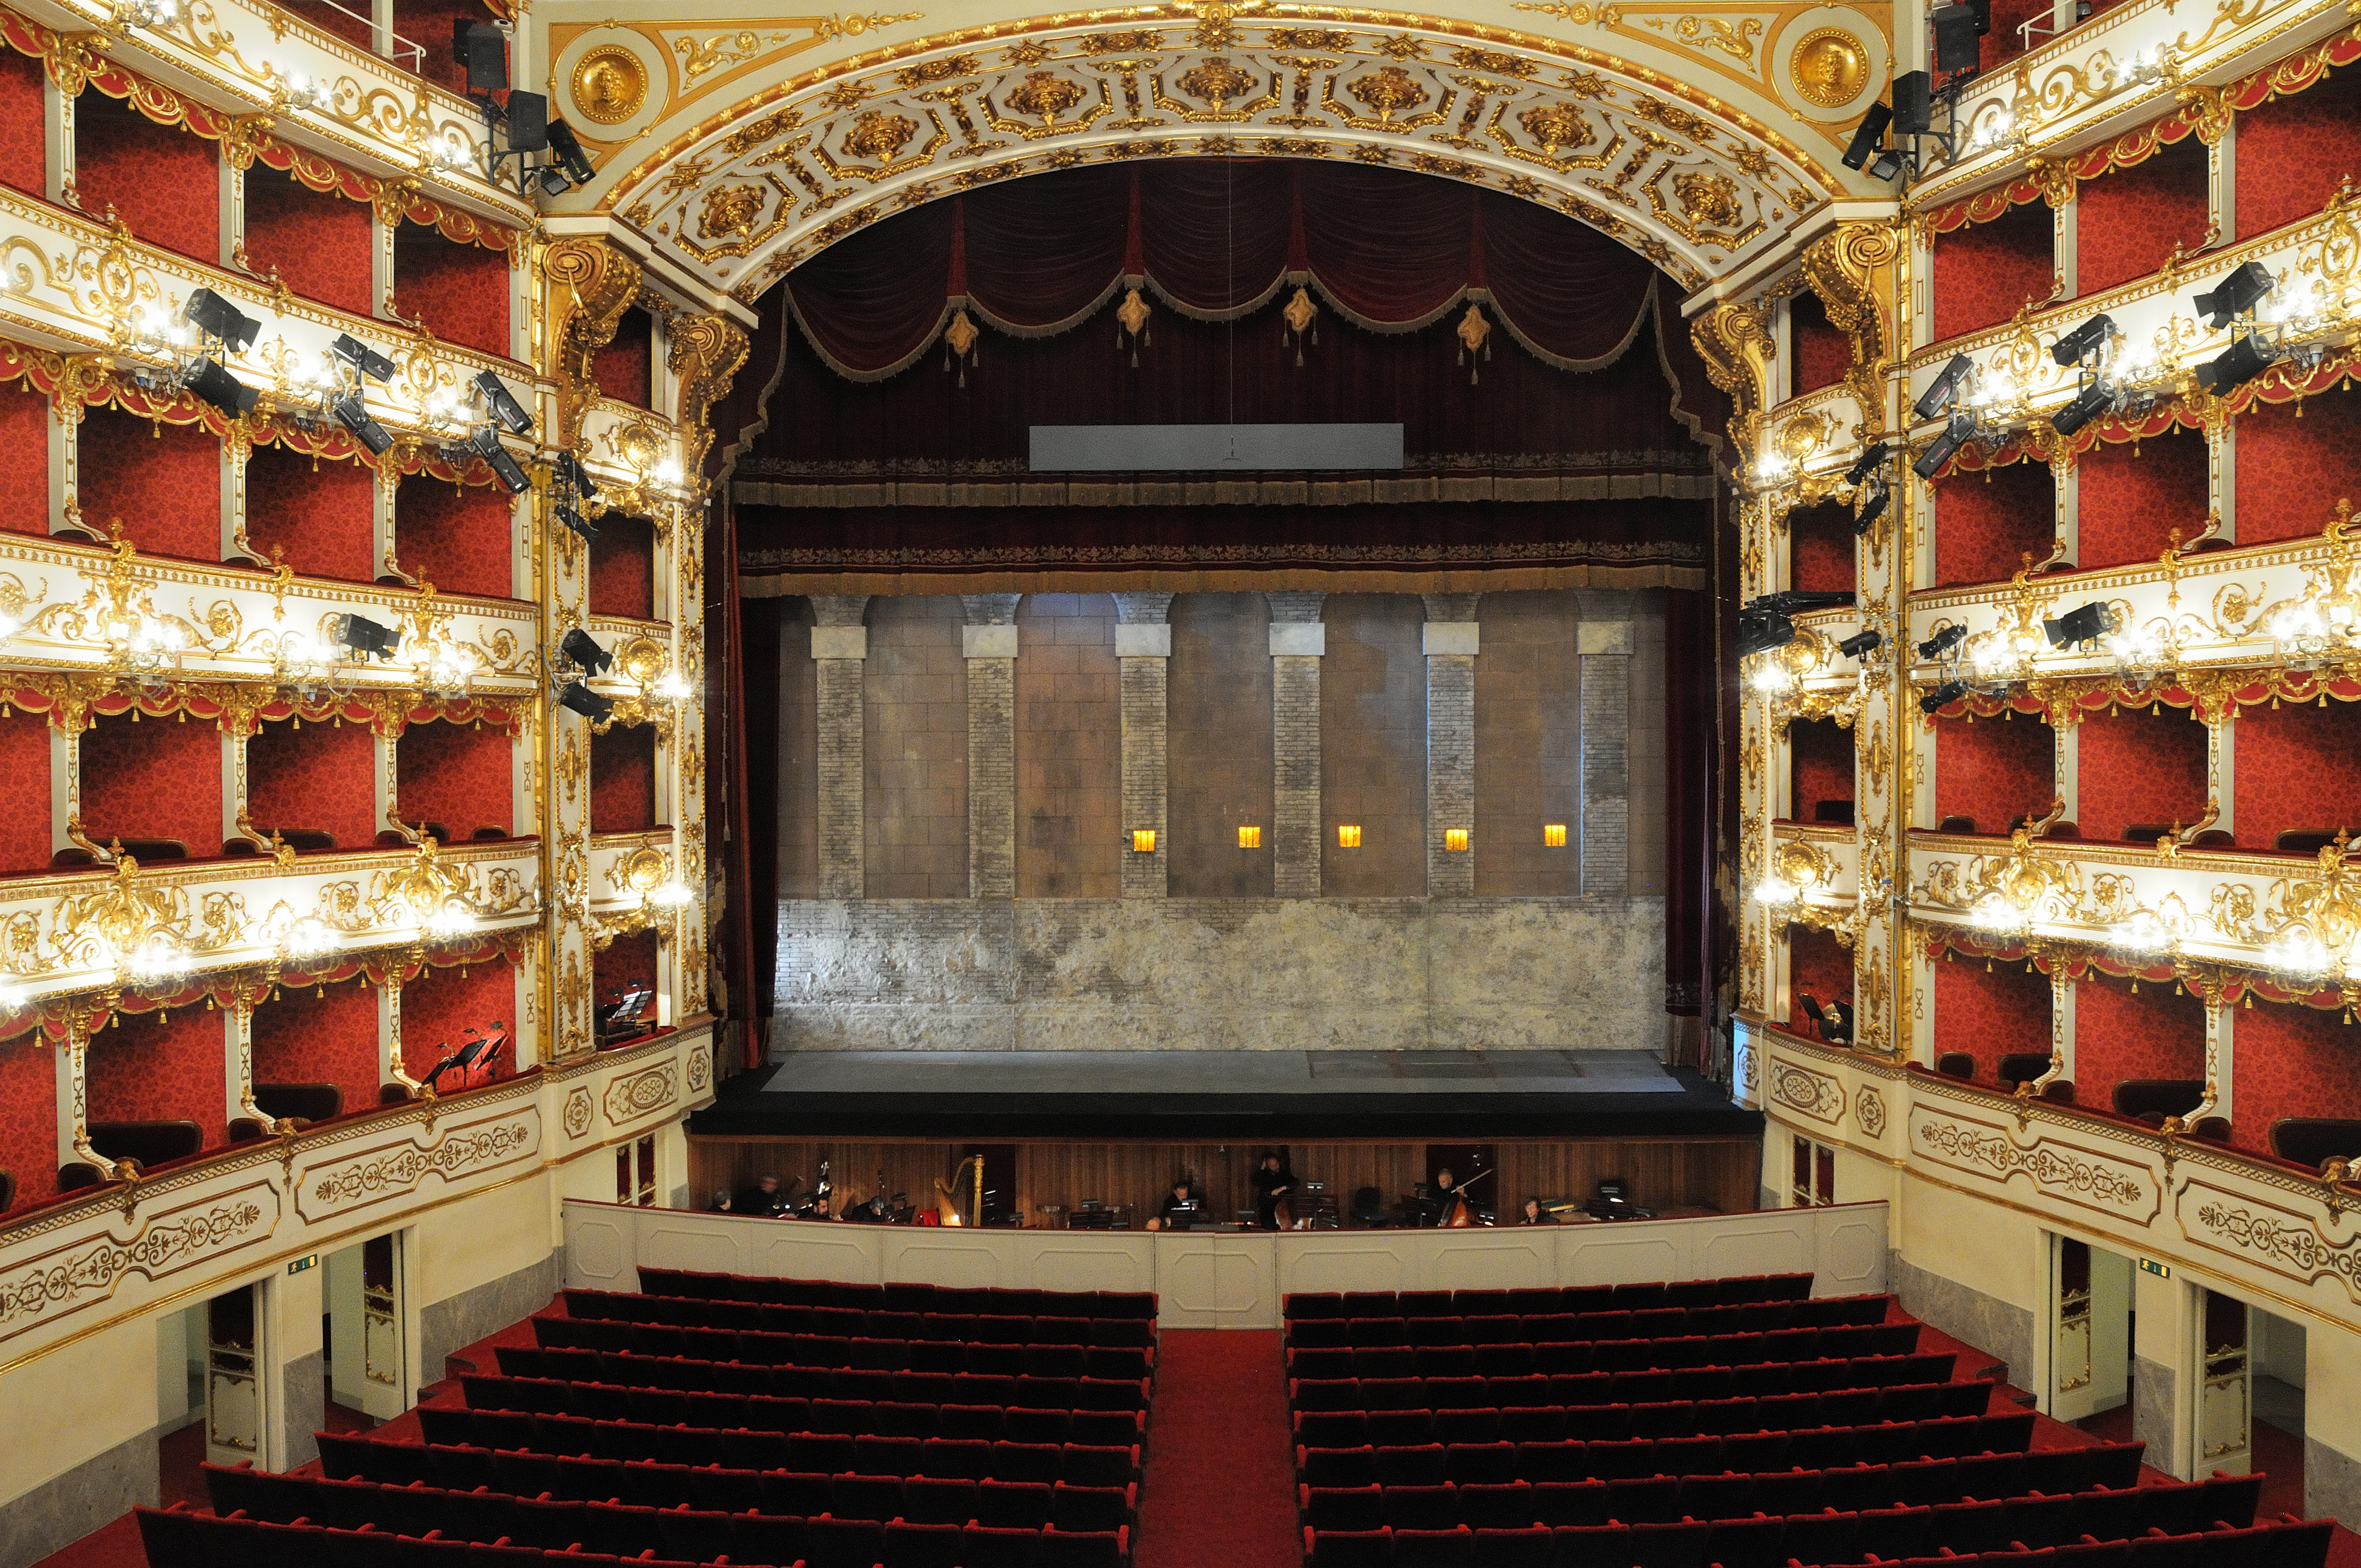 photo: https://upload.wikimedia.org/wikipedia/commons/a/ae/Teatro_Municipale_Romolo_Valli_03.jpg